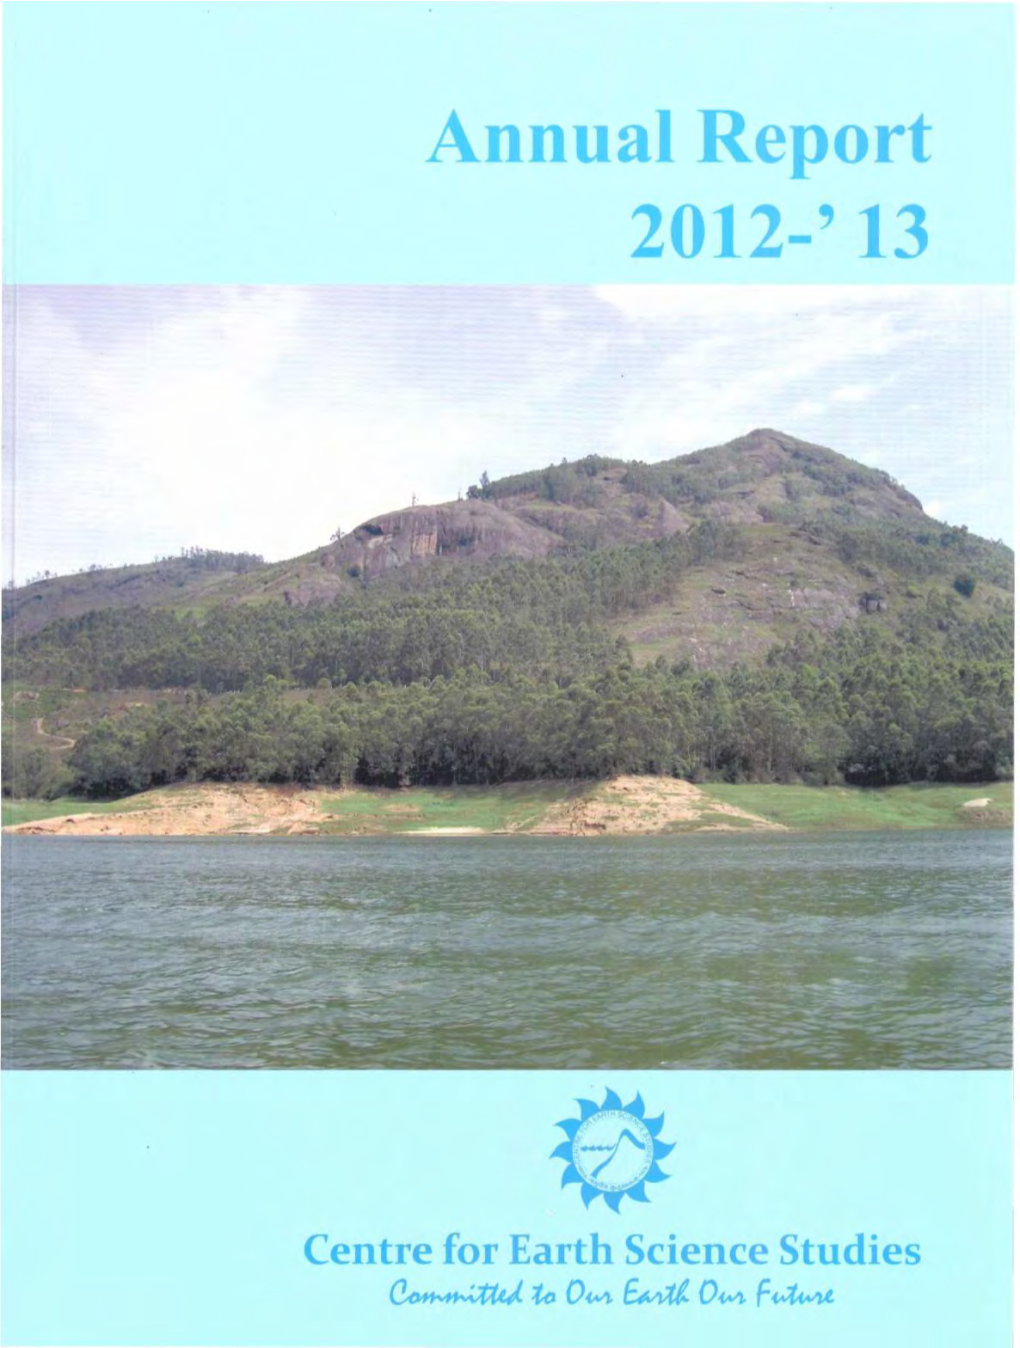 Kerala Khondalite Belt: Petrology and Geodynamics 0/ Their Formation